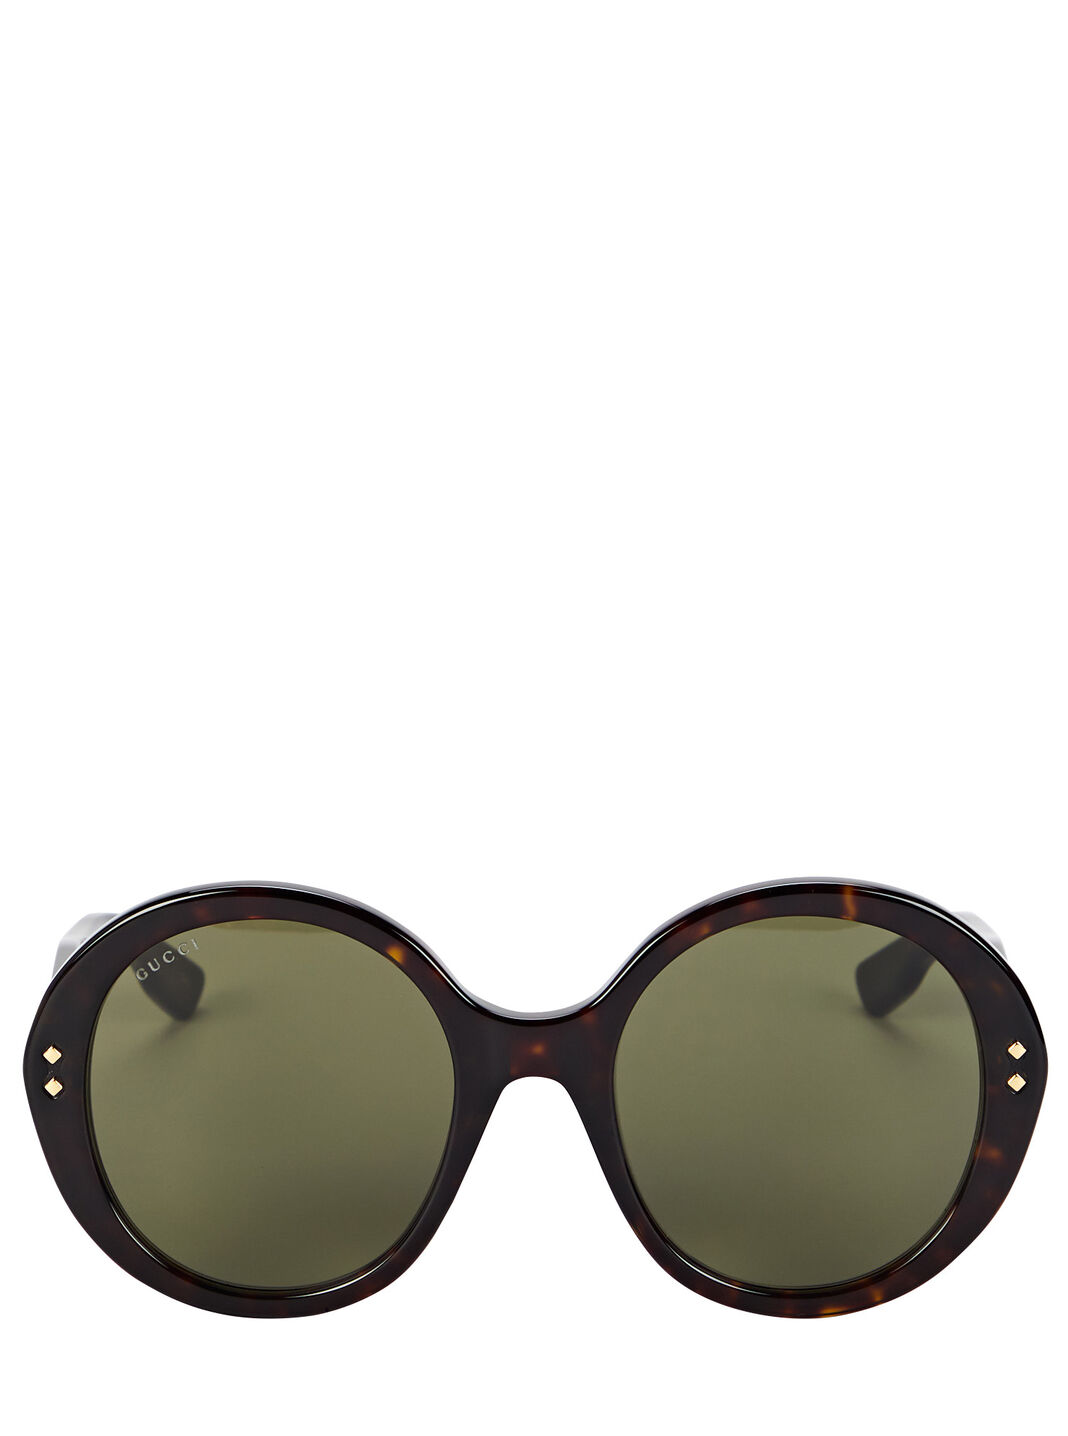 Nouvelle Tortoiseshell Round Sunglasses